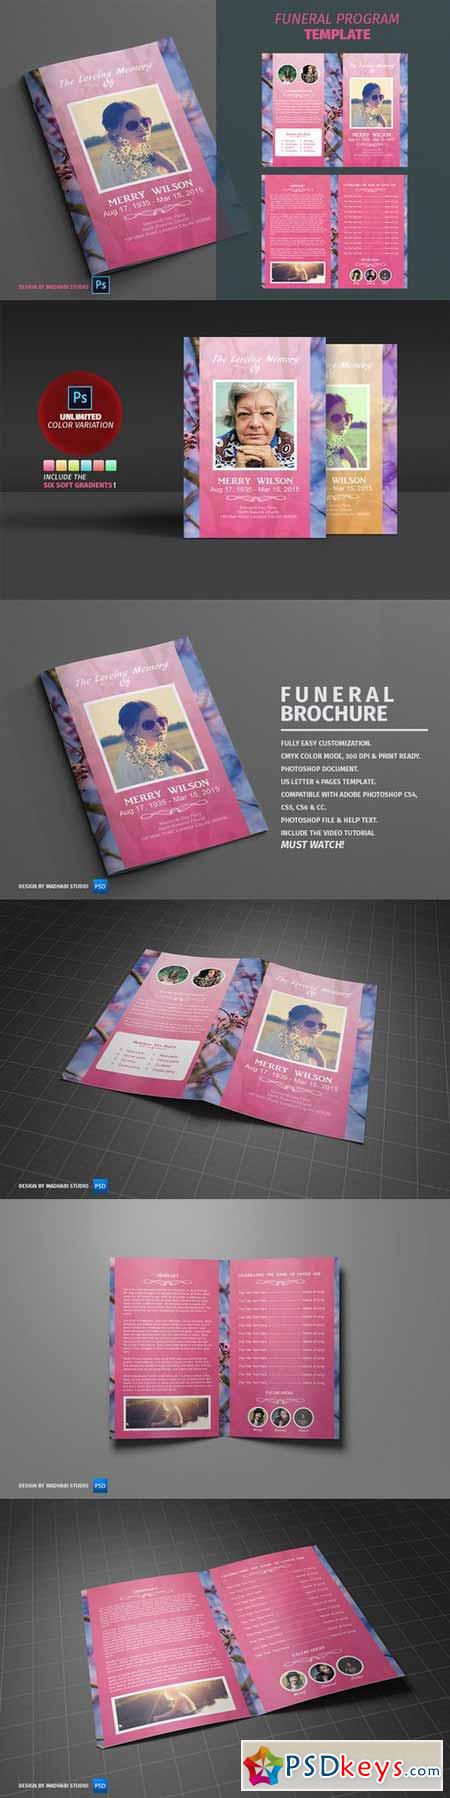 Funeral Program Template vol01 364812